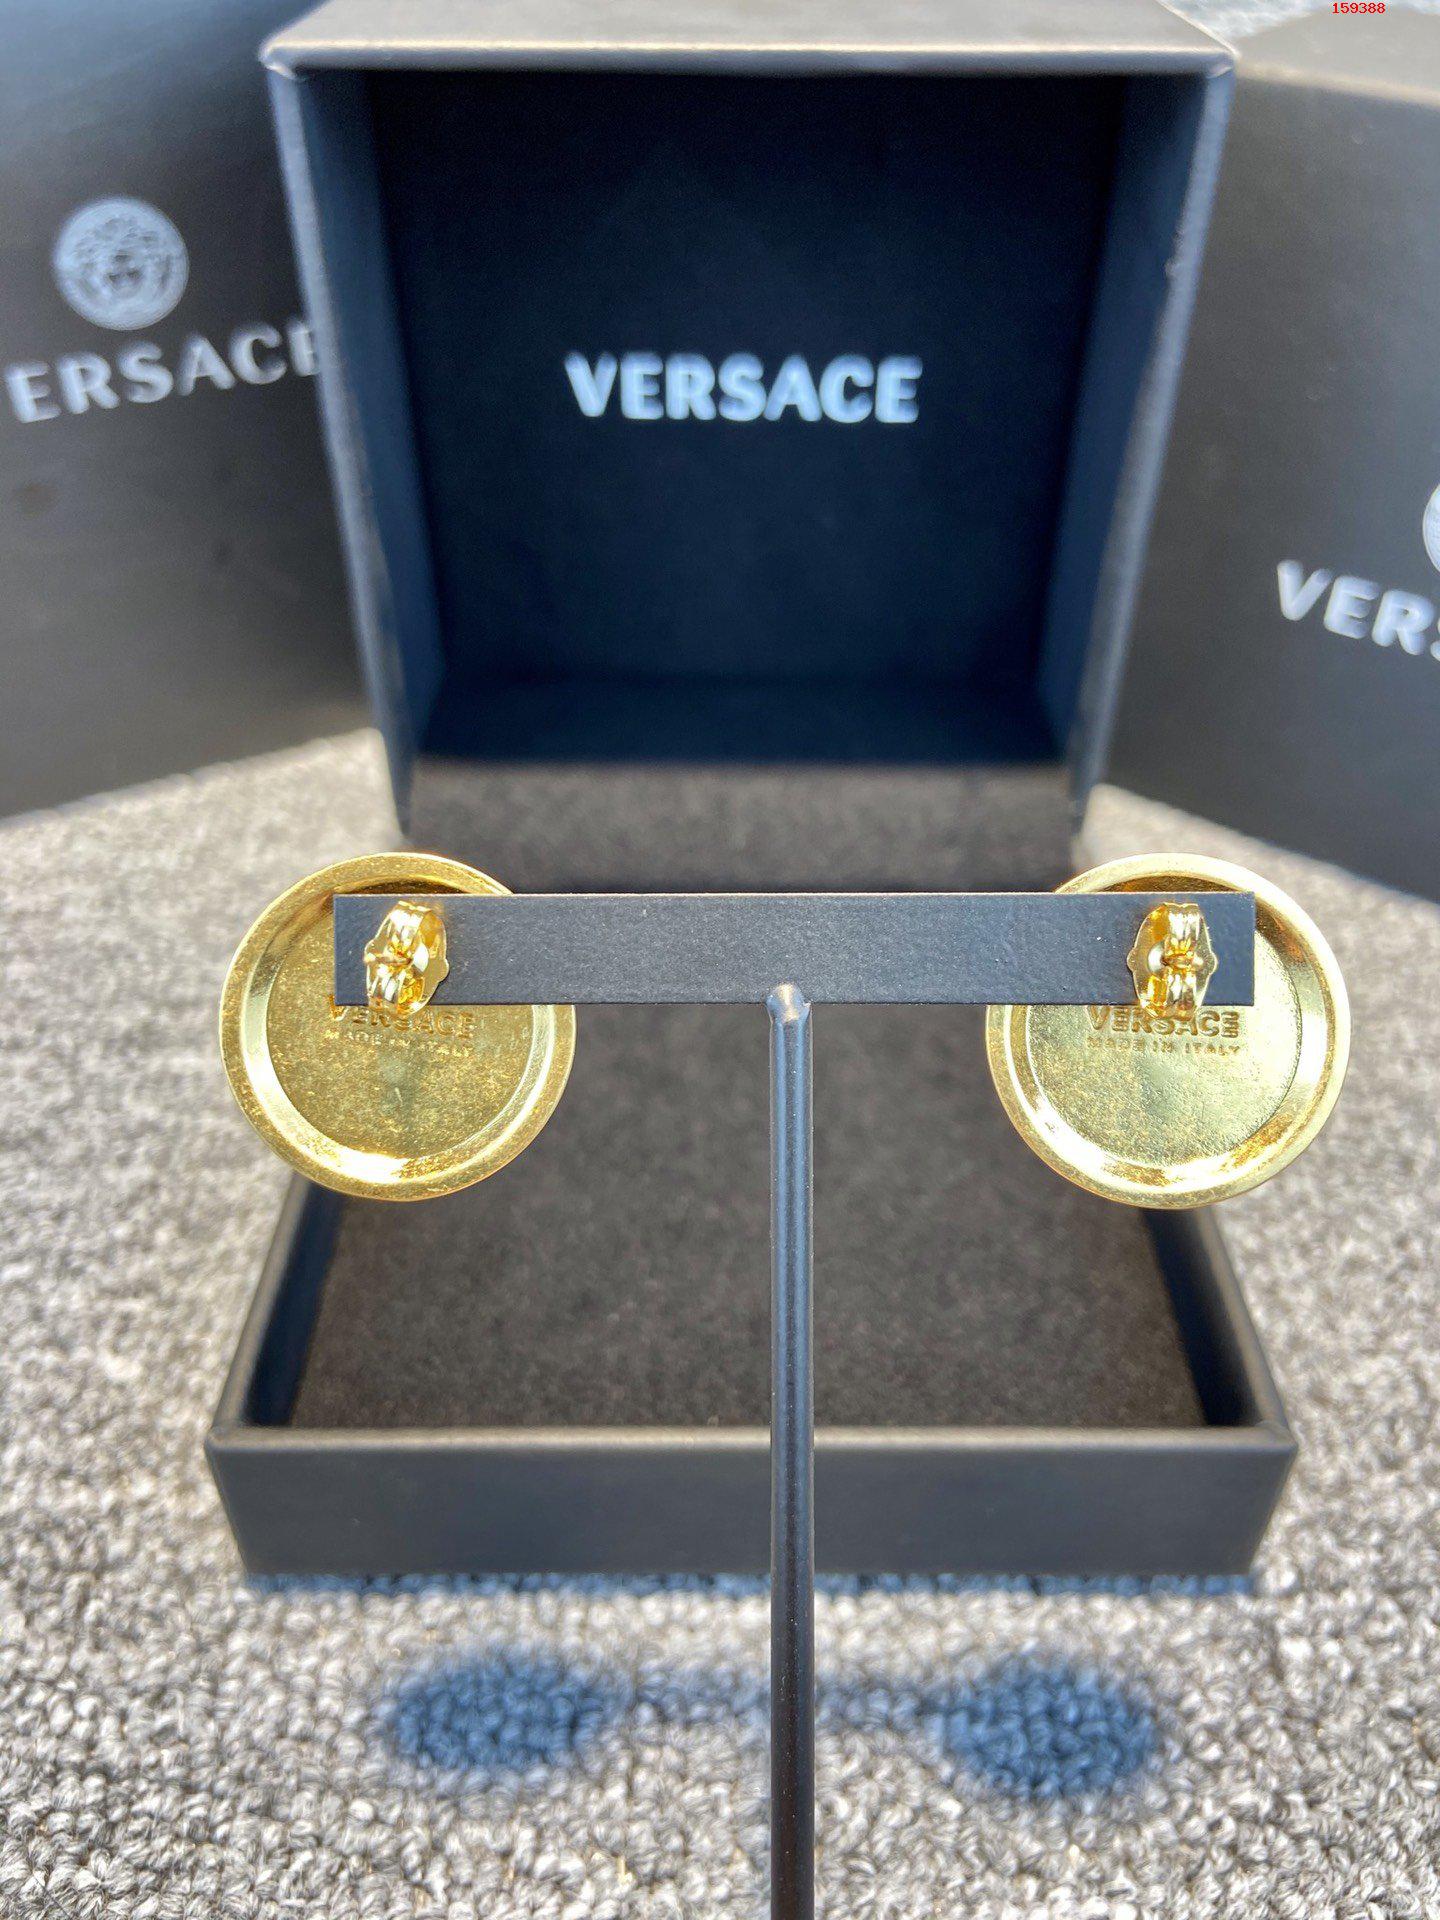 Versace范思哲耳环品牌标志是 高仿名牌耳钉 精仿名牌耳钉 原版名牌耳钉 A货名牌耳钉 原单名牌耳钉 